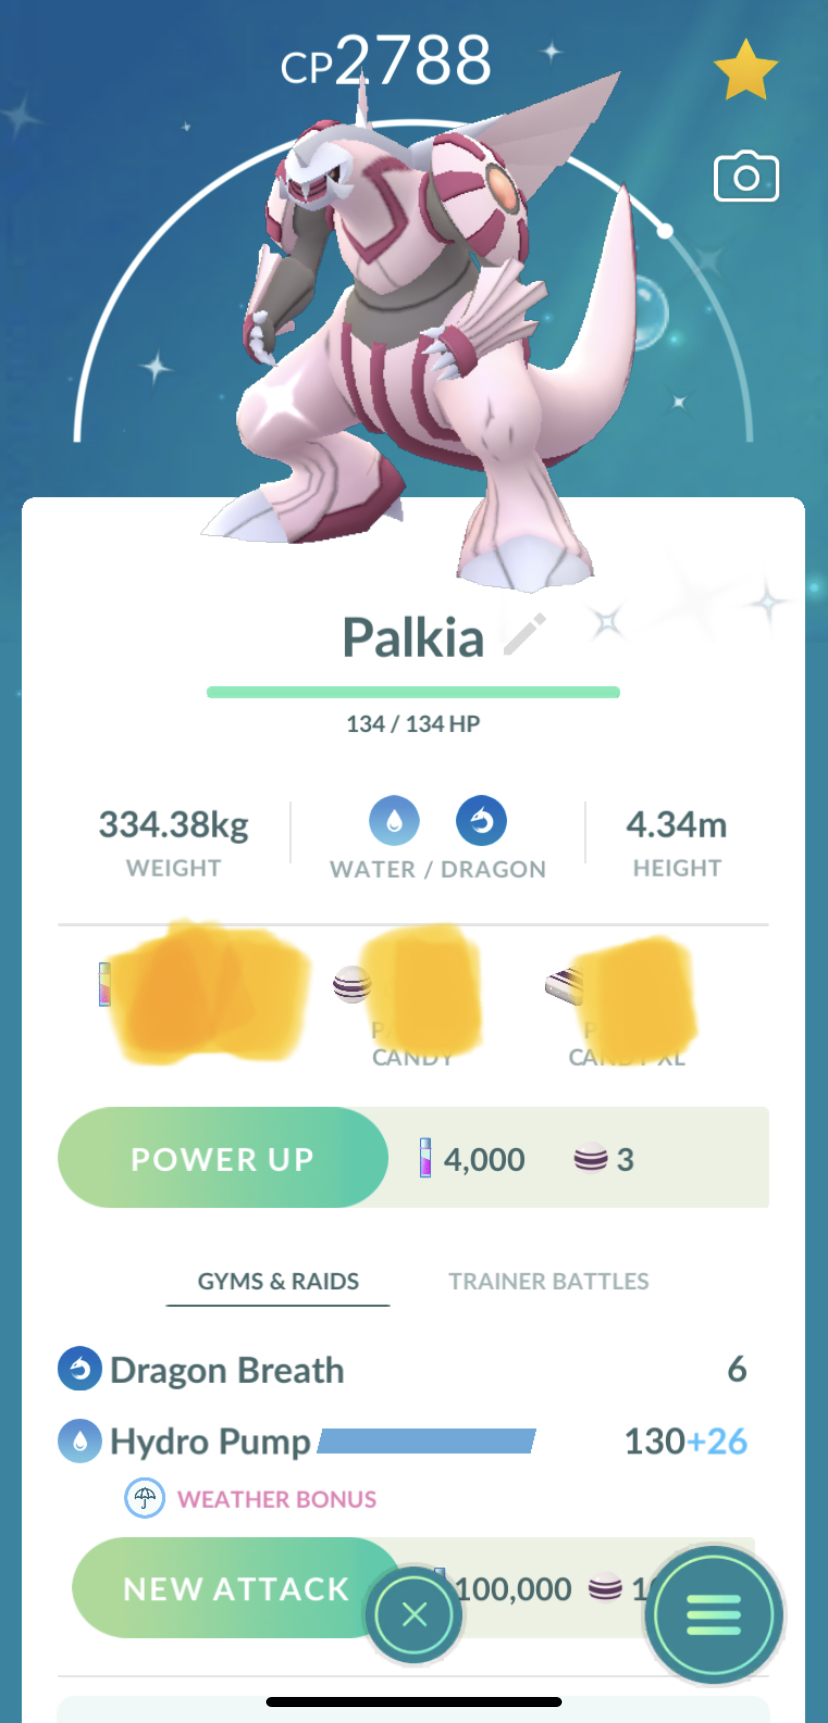 Shiny Palkia - Pokemon Go